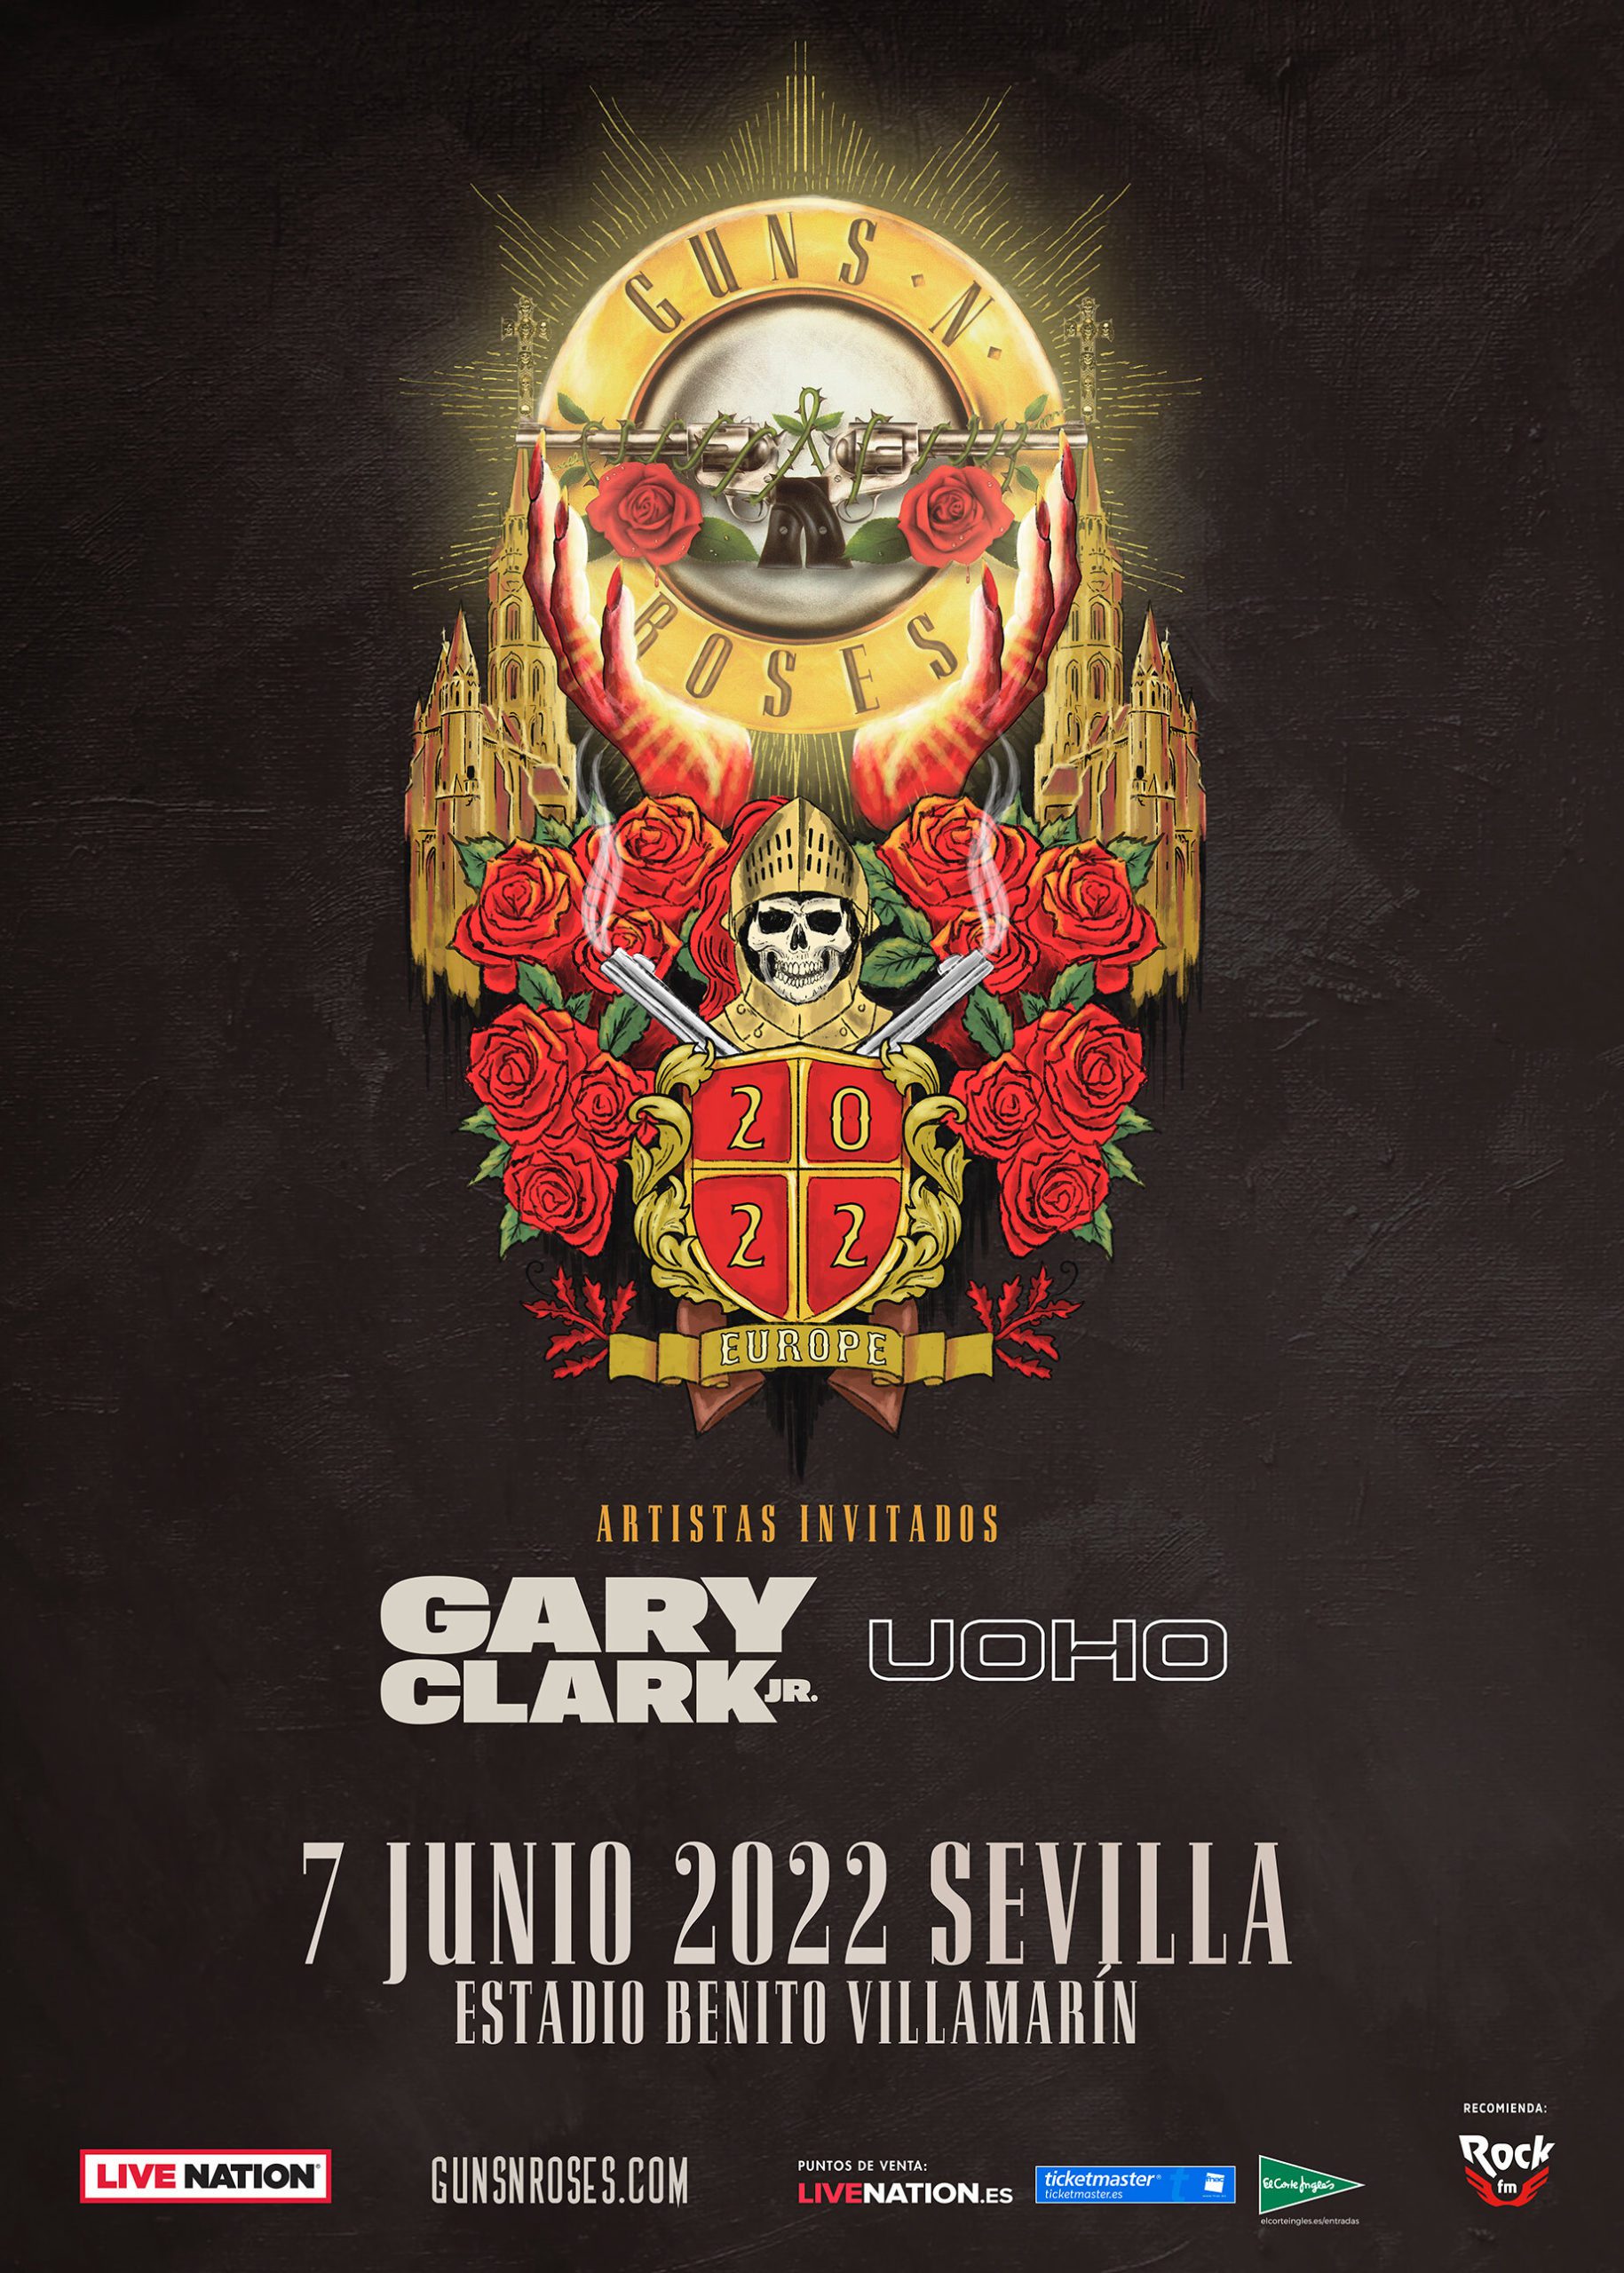 UOHO telonero de Guns N Roses en Sevilla